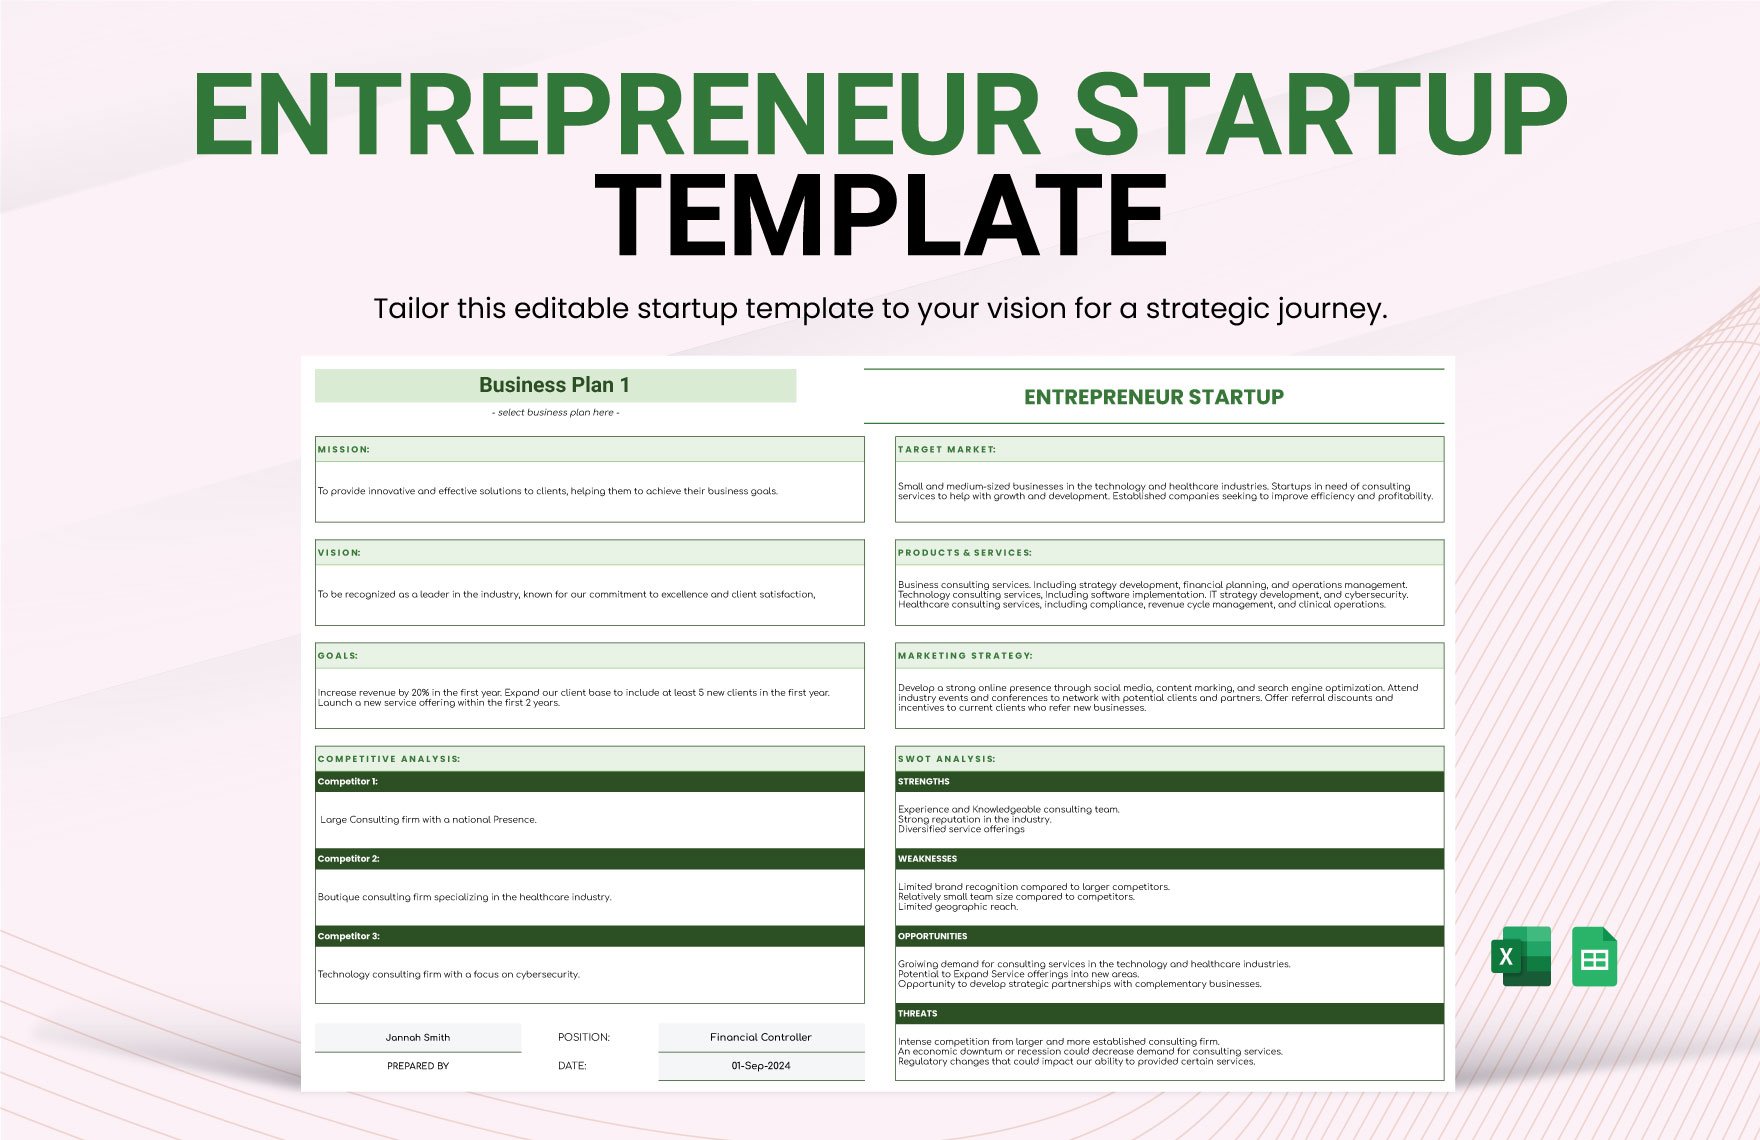 Entrepreneur Startup Template in Excel, Google Sheets